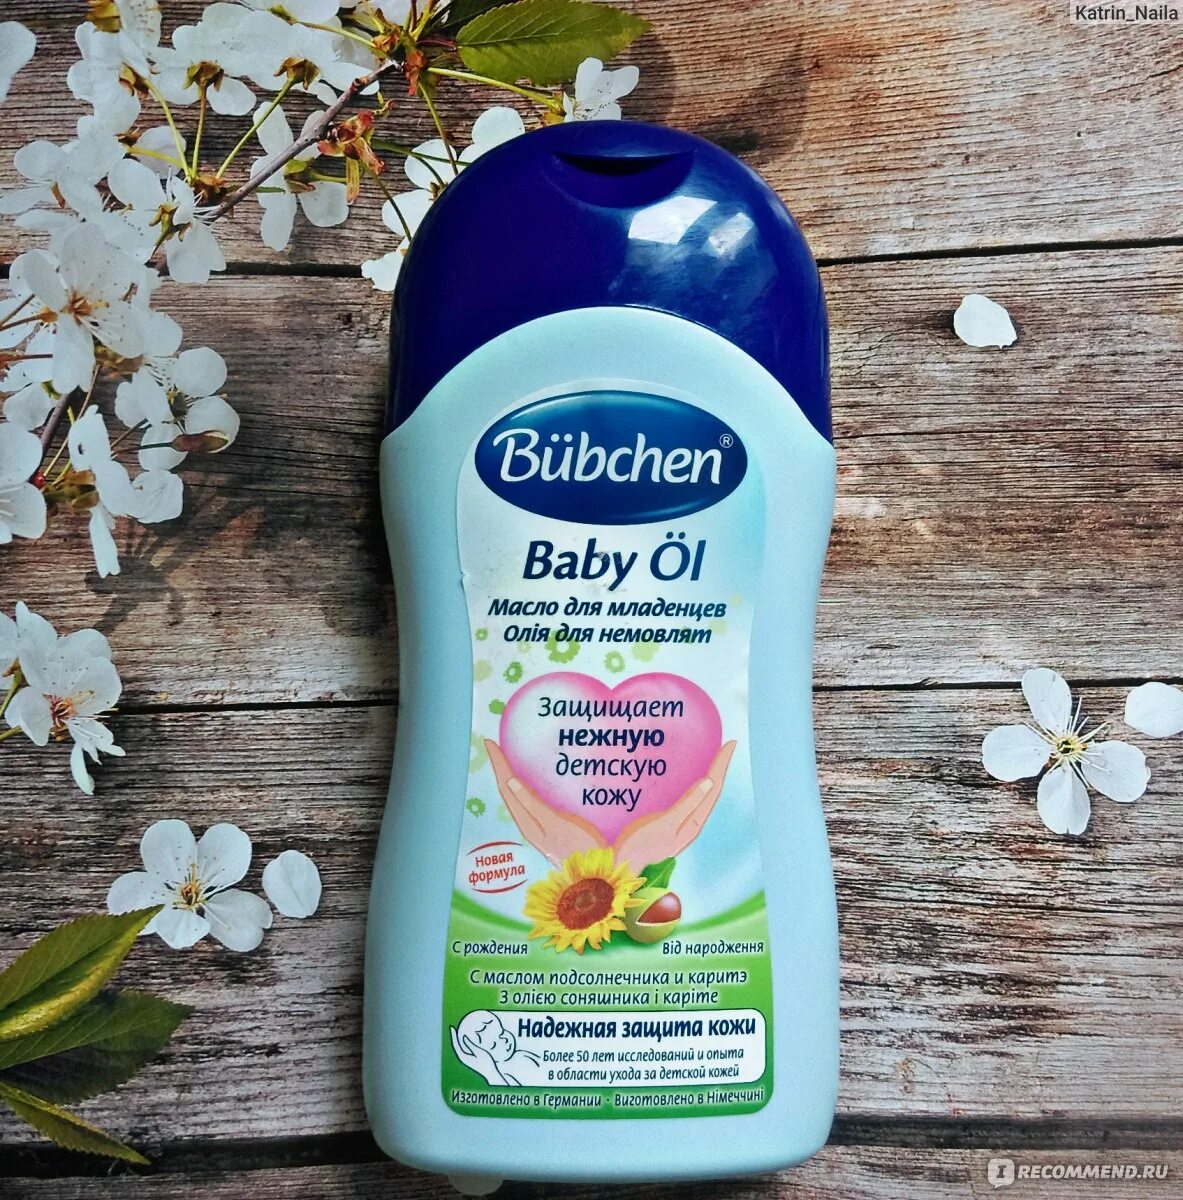 Bubchen масло для младенцев. Масло Bubchen для младенцев гипоаллергенный. Bübchen Baby ol масло для младенцев. Bubchen реклама. Bubchen для купания